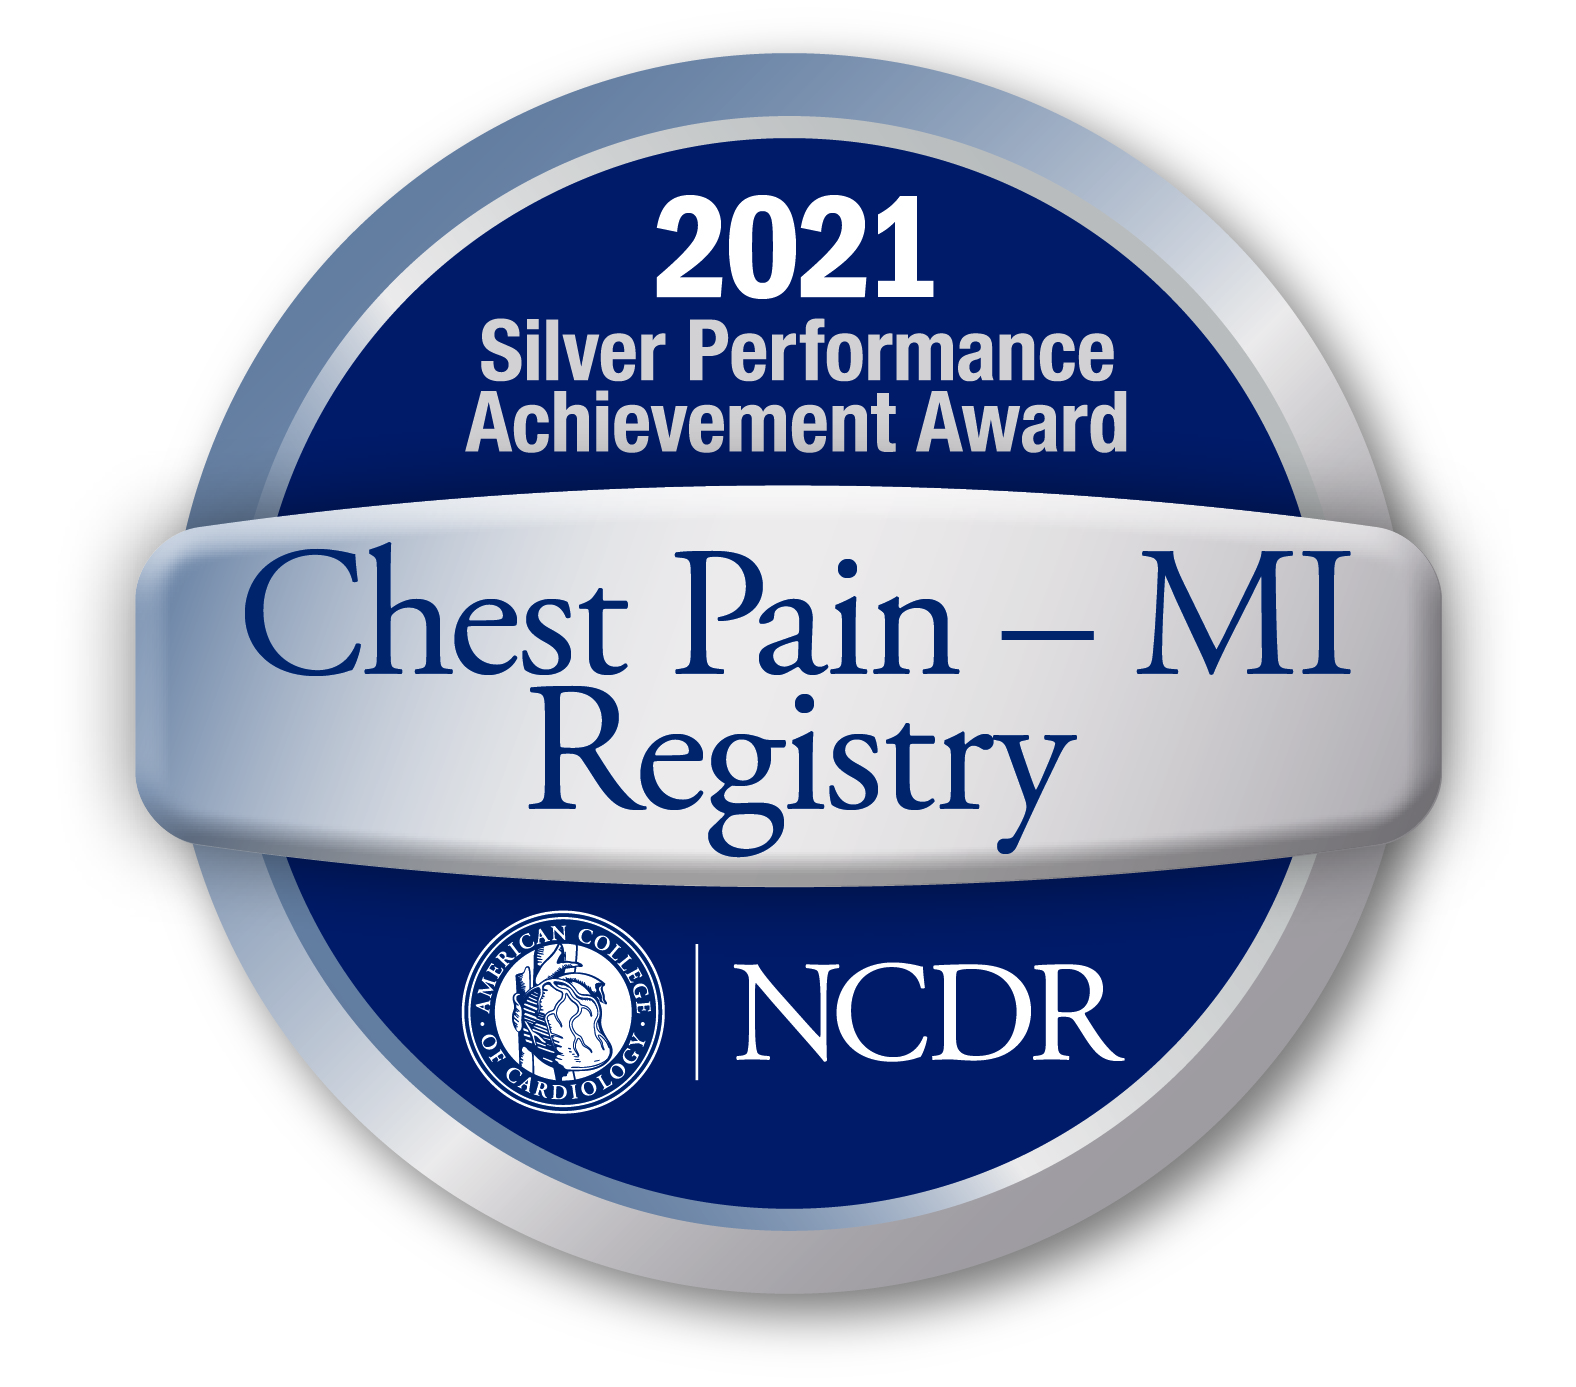 Silver Performance Achievement Award